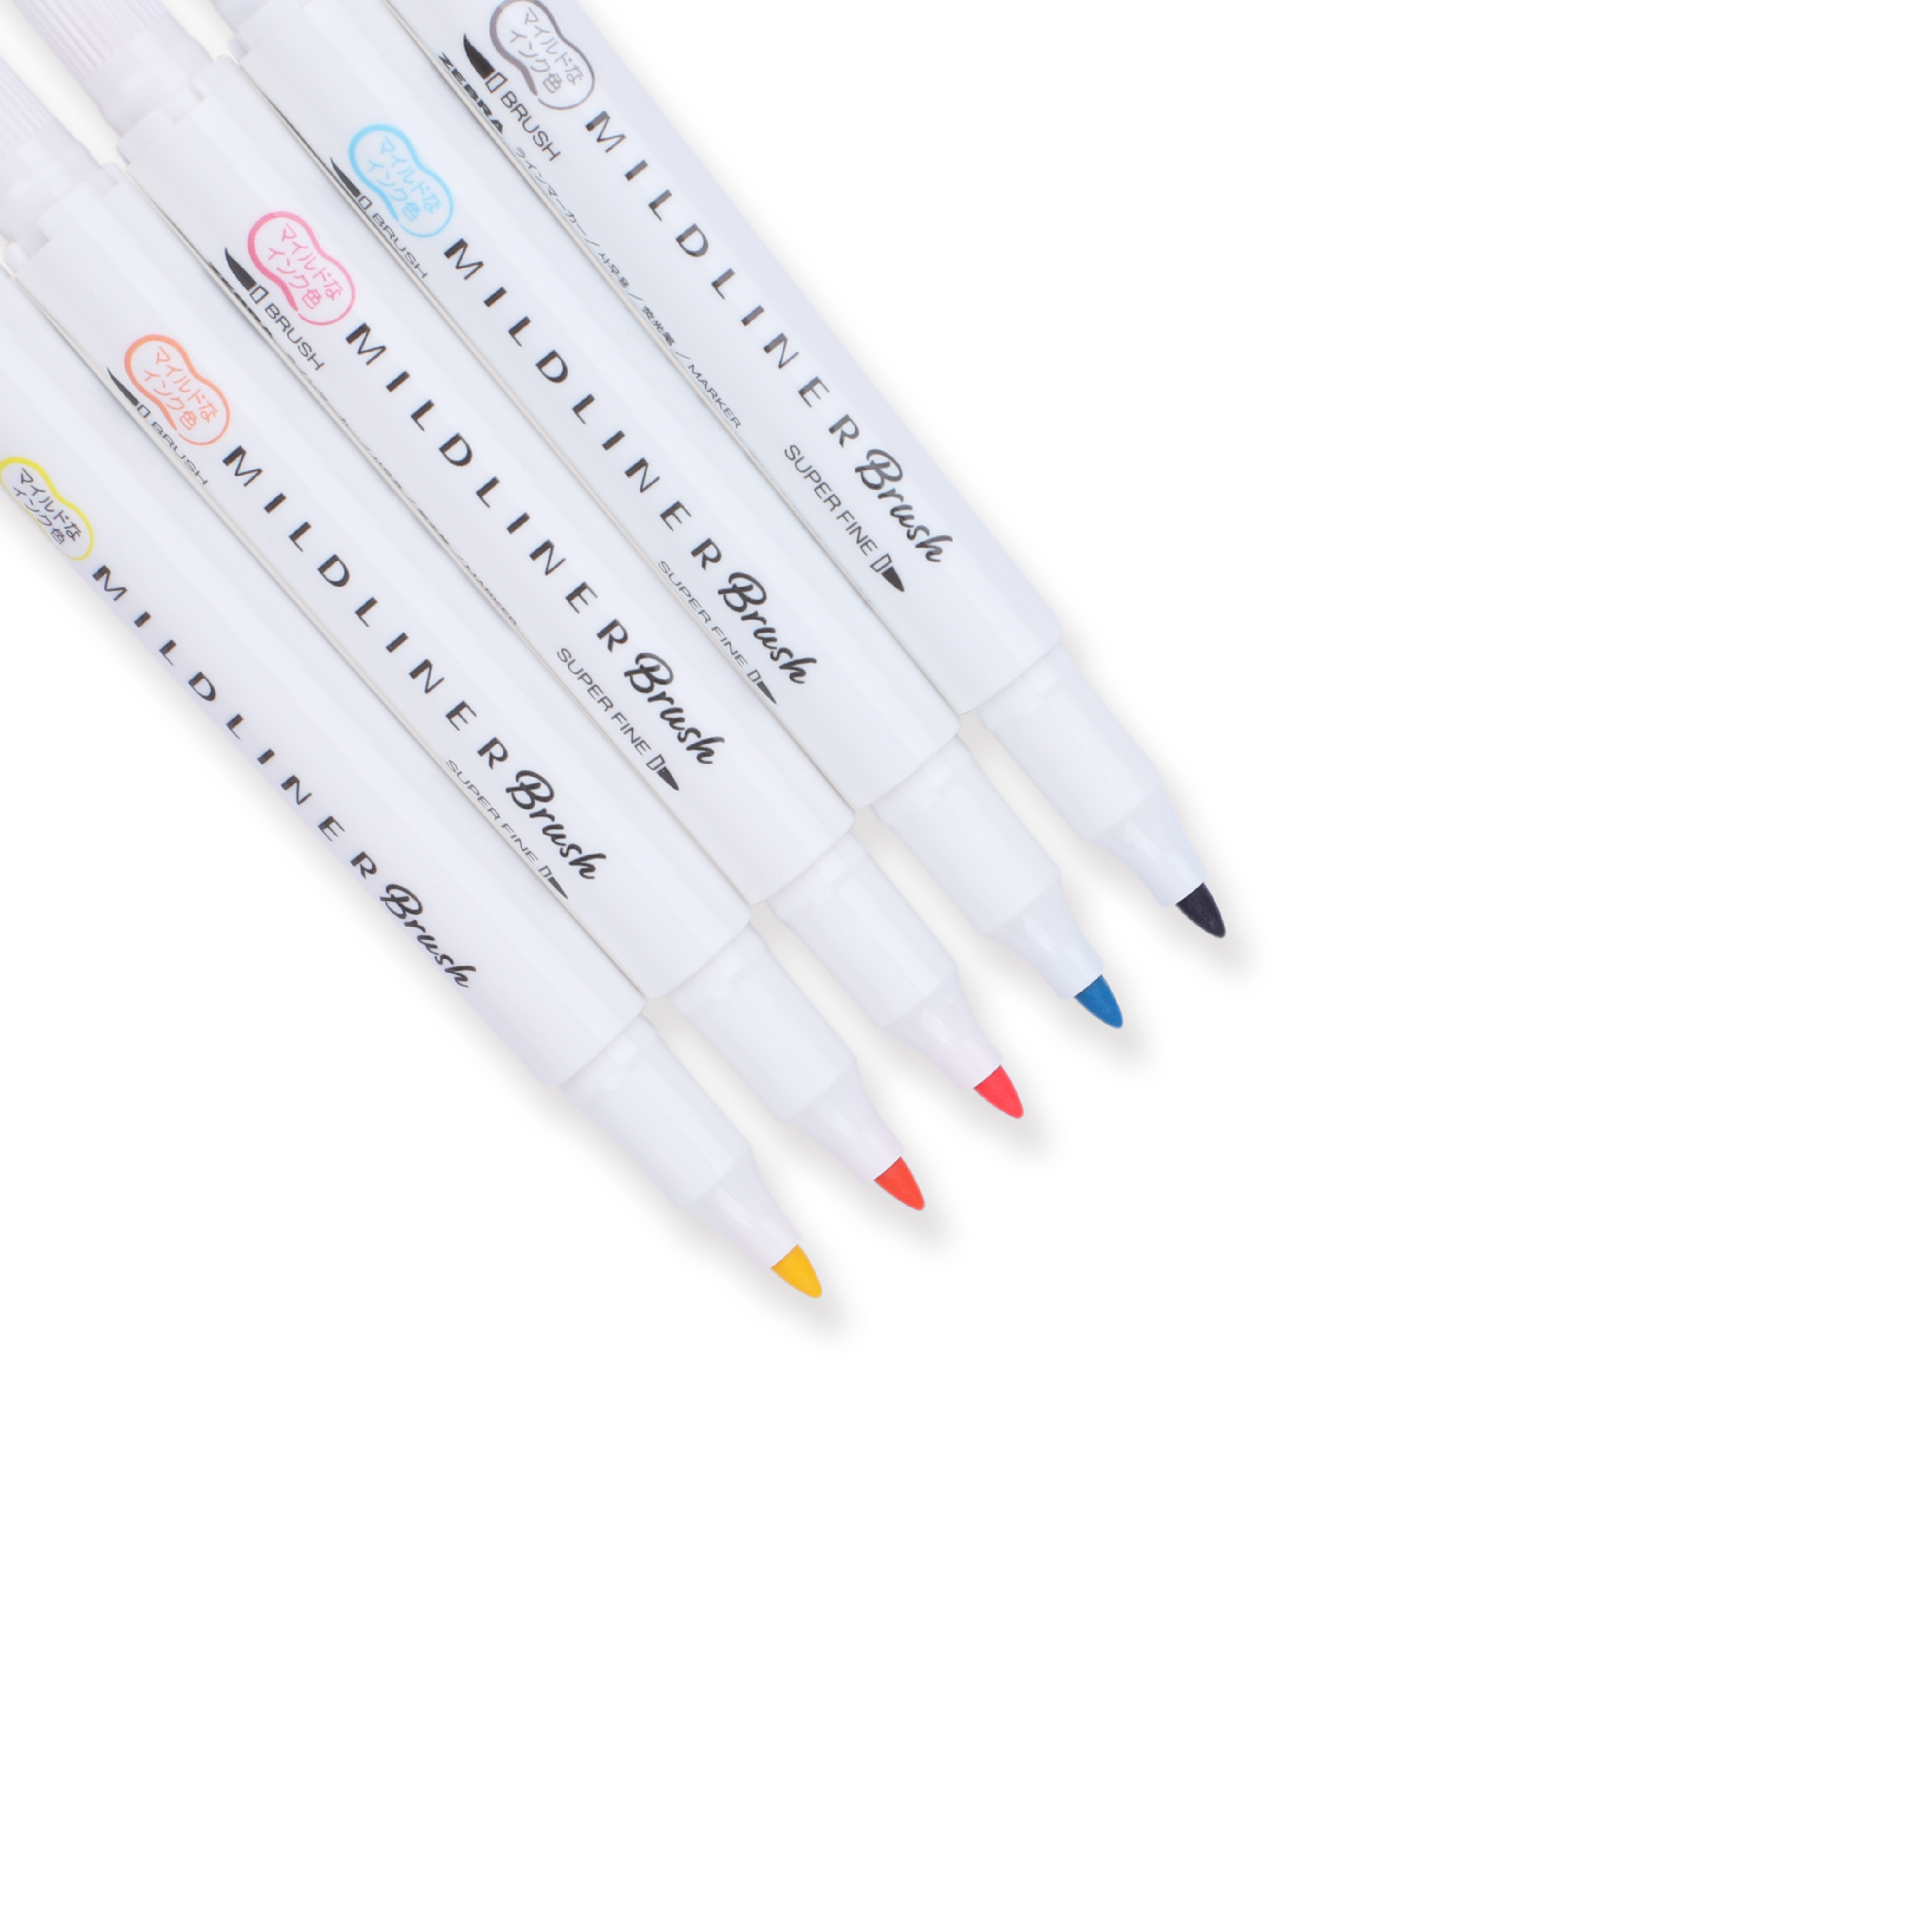 Zebra Mildliner Brush 5 Color Set – Yoseka Stationery